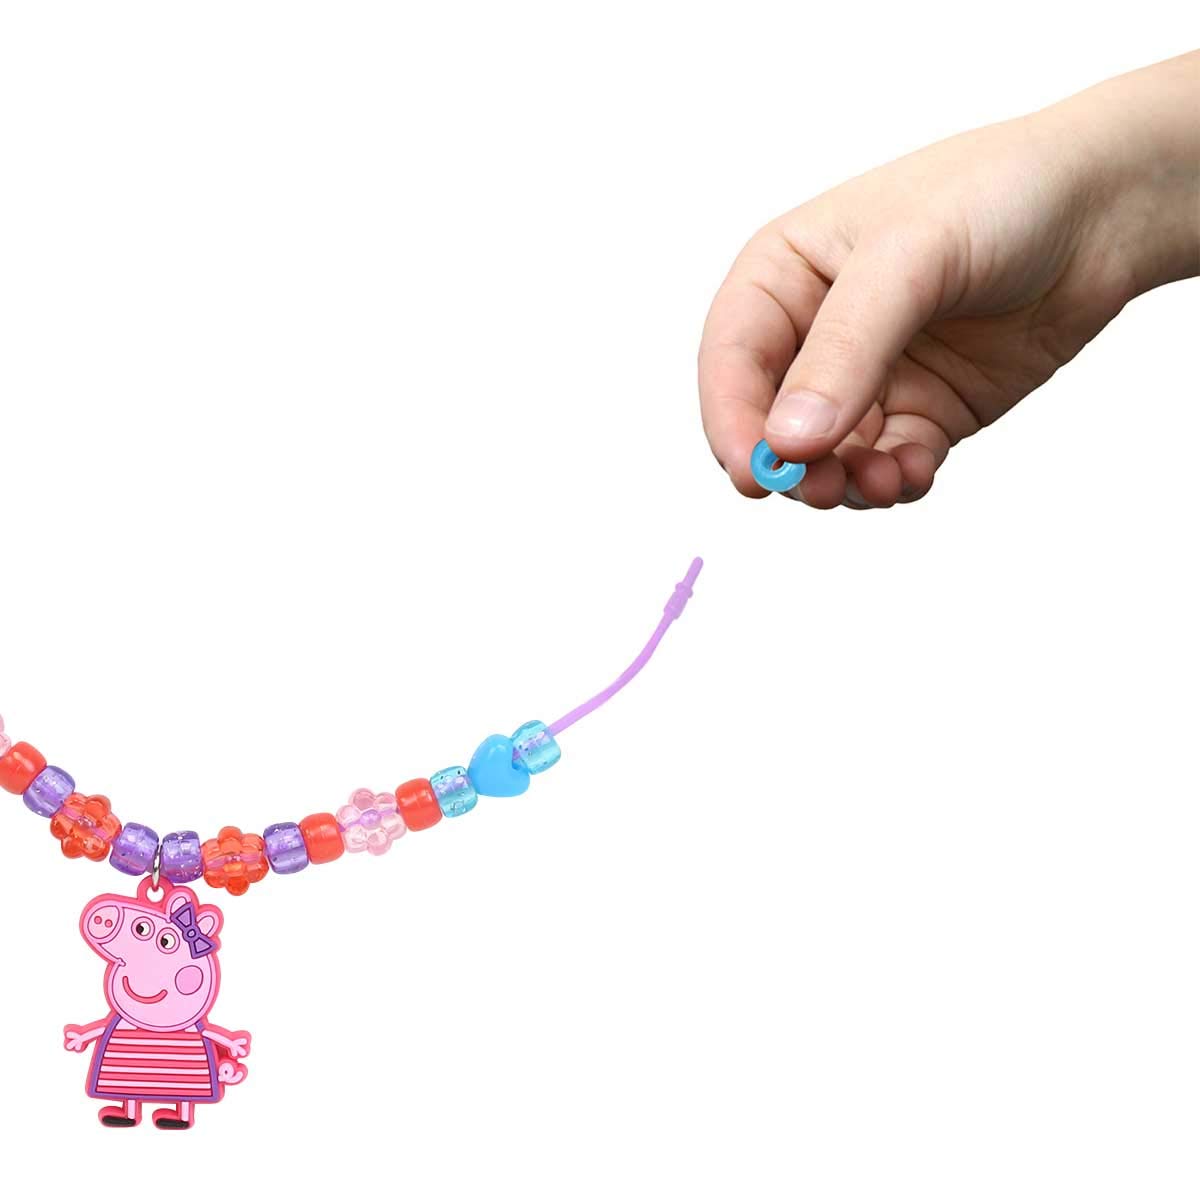 Tara Toys Disney Princess Necklace Activity Set, 9.7x8.18x2